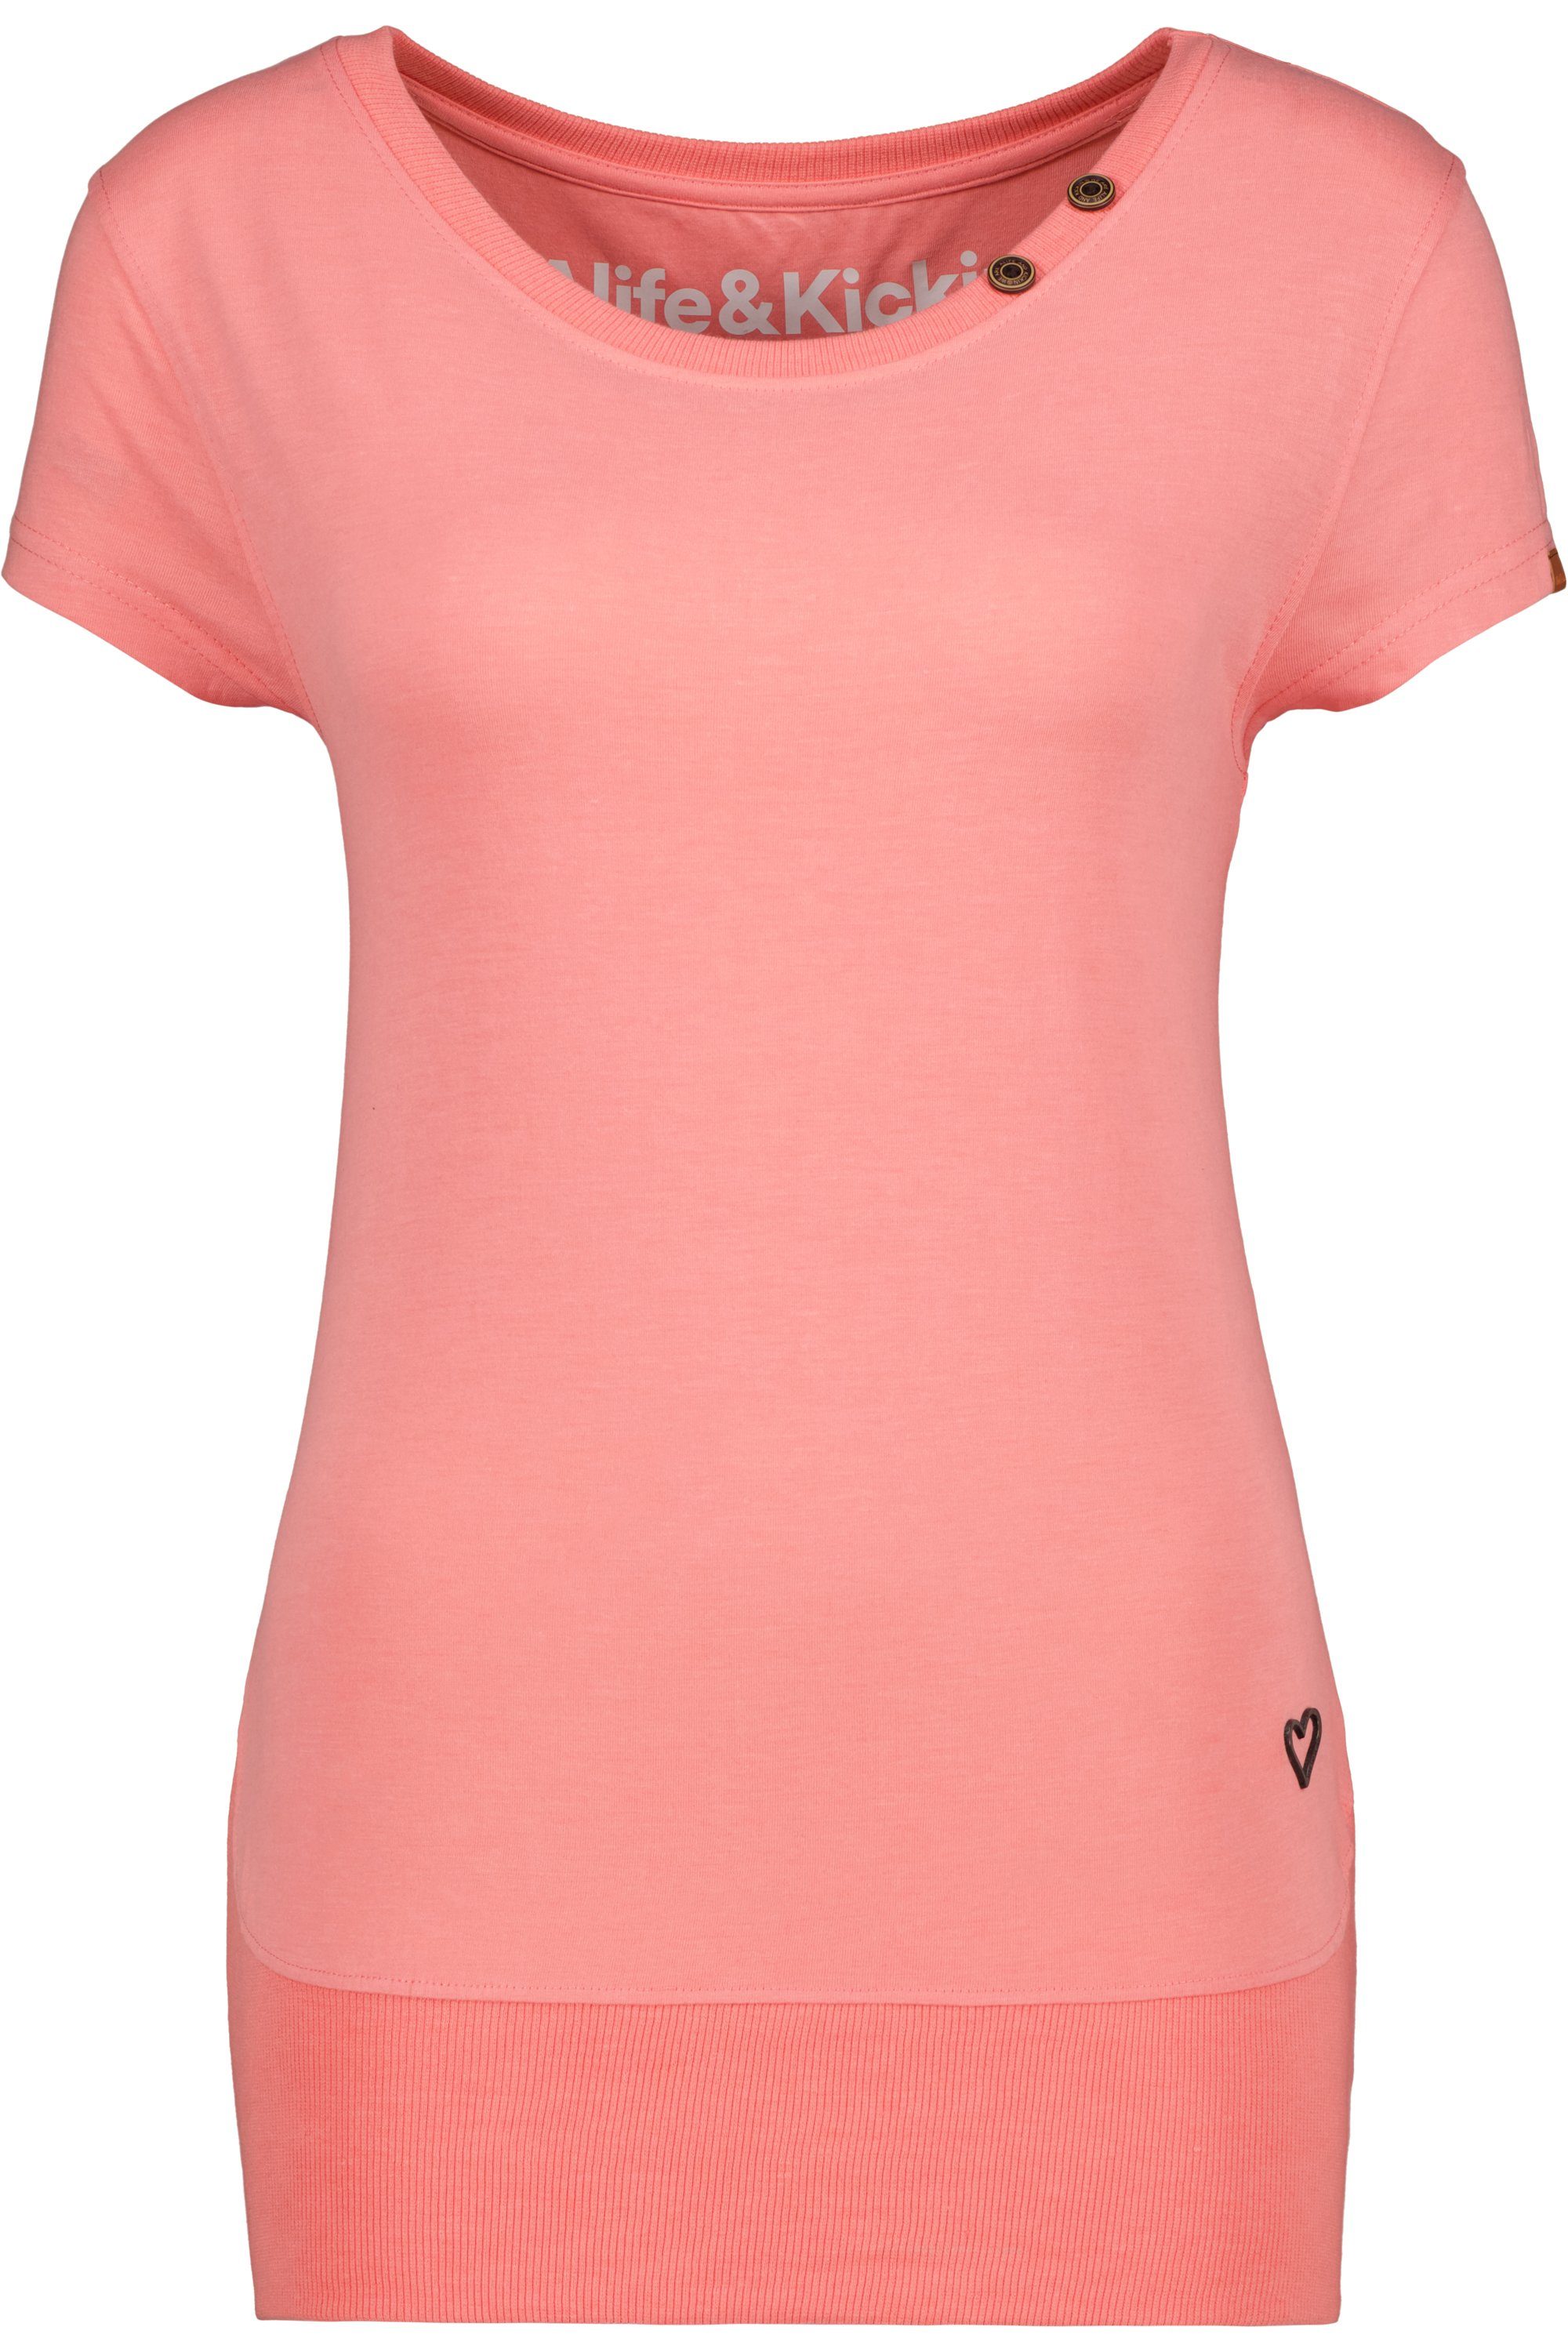 A melange & Kickin T-Shirt peach Shirt Damen Alife T-Shirt CocoAK